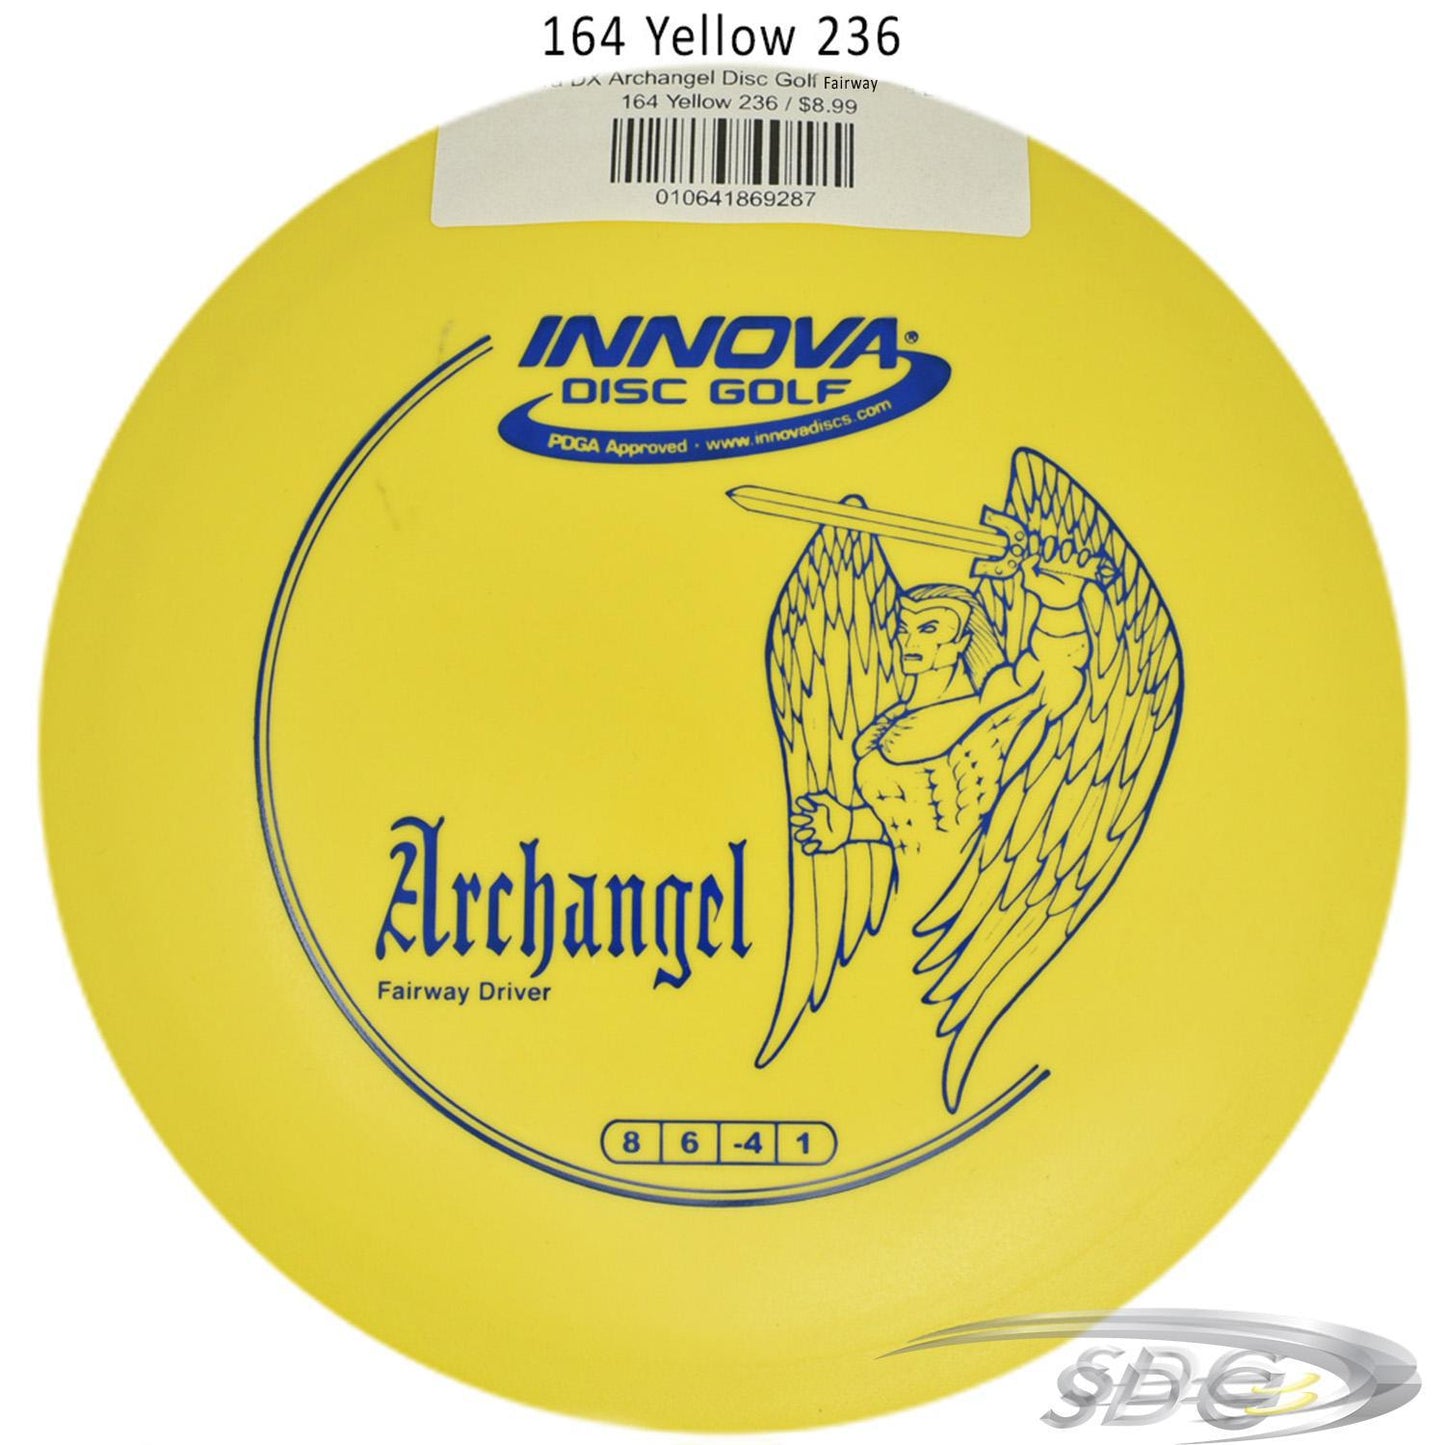 innova-dx-archangel-disc-golf-fairway-driver 164 Yellow 236 